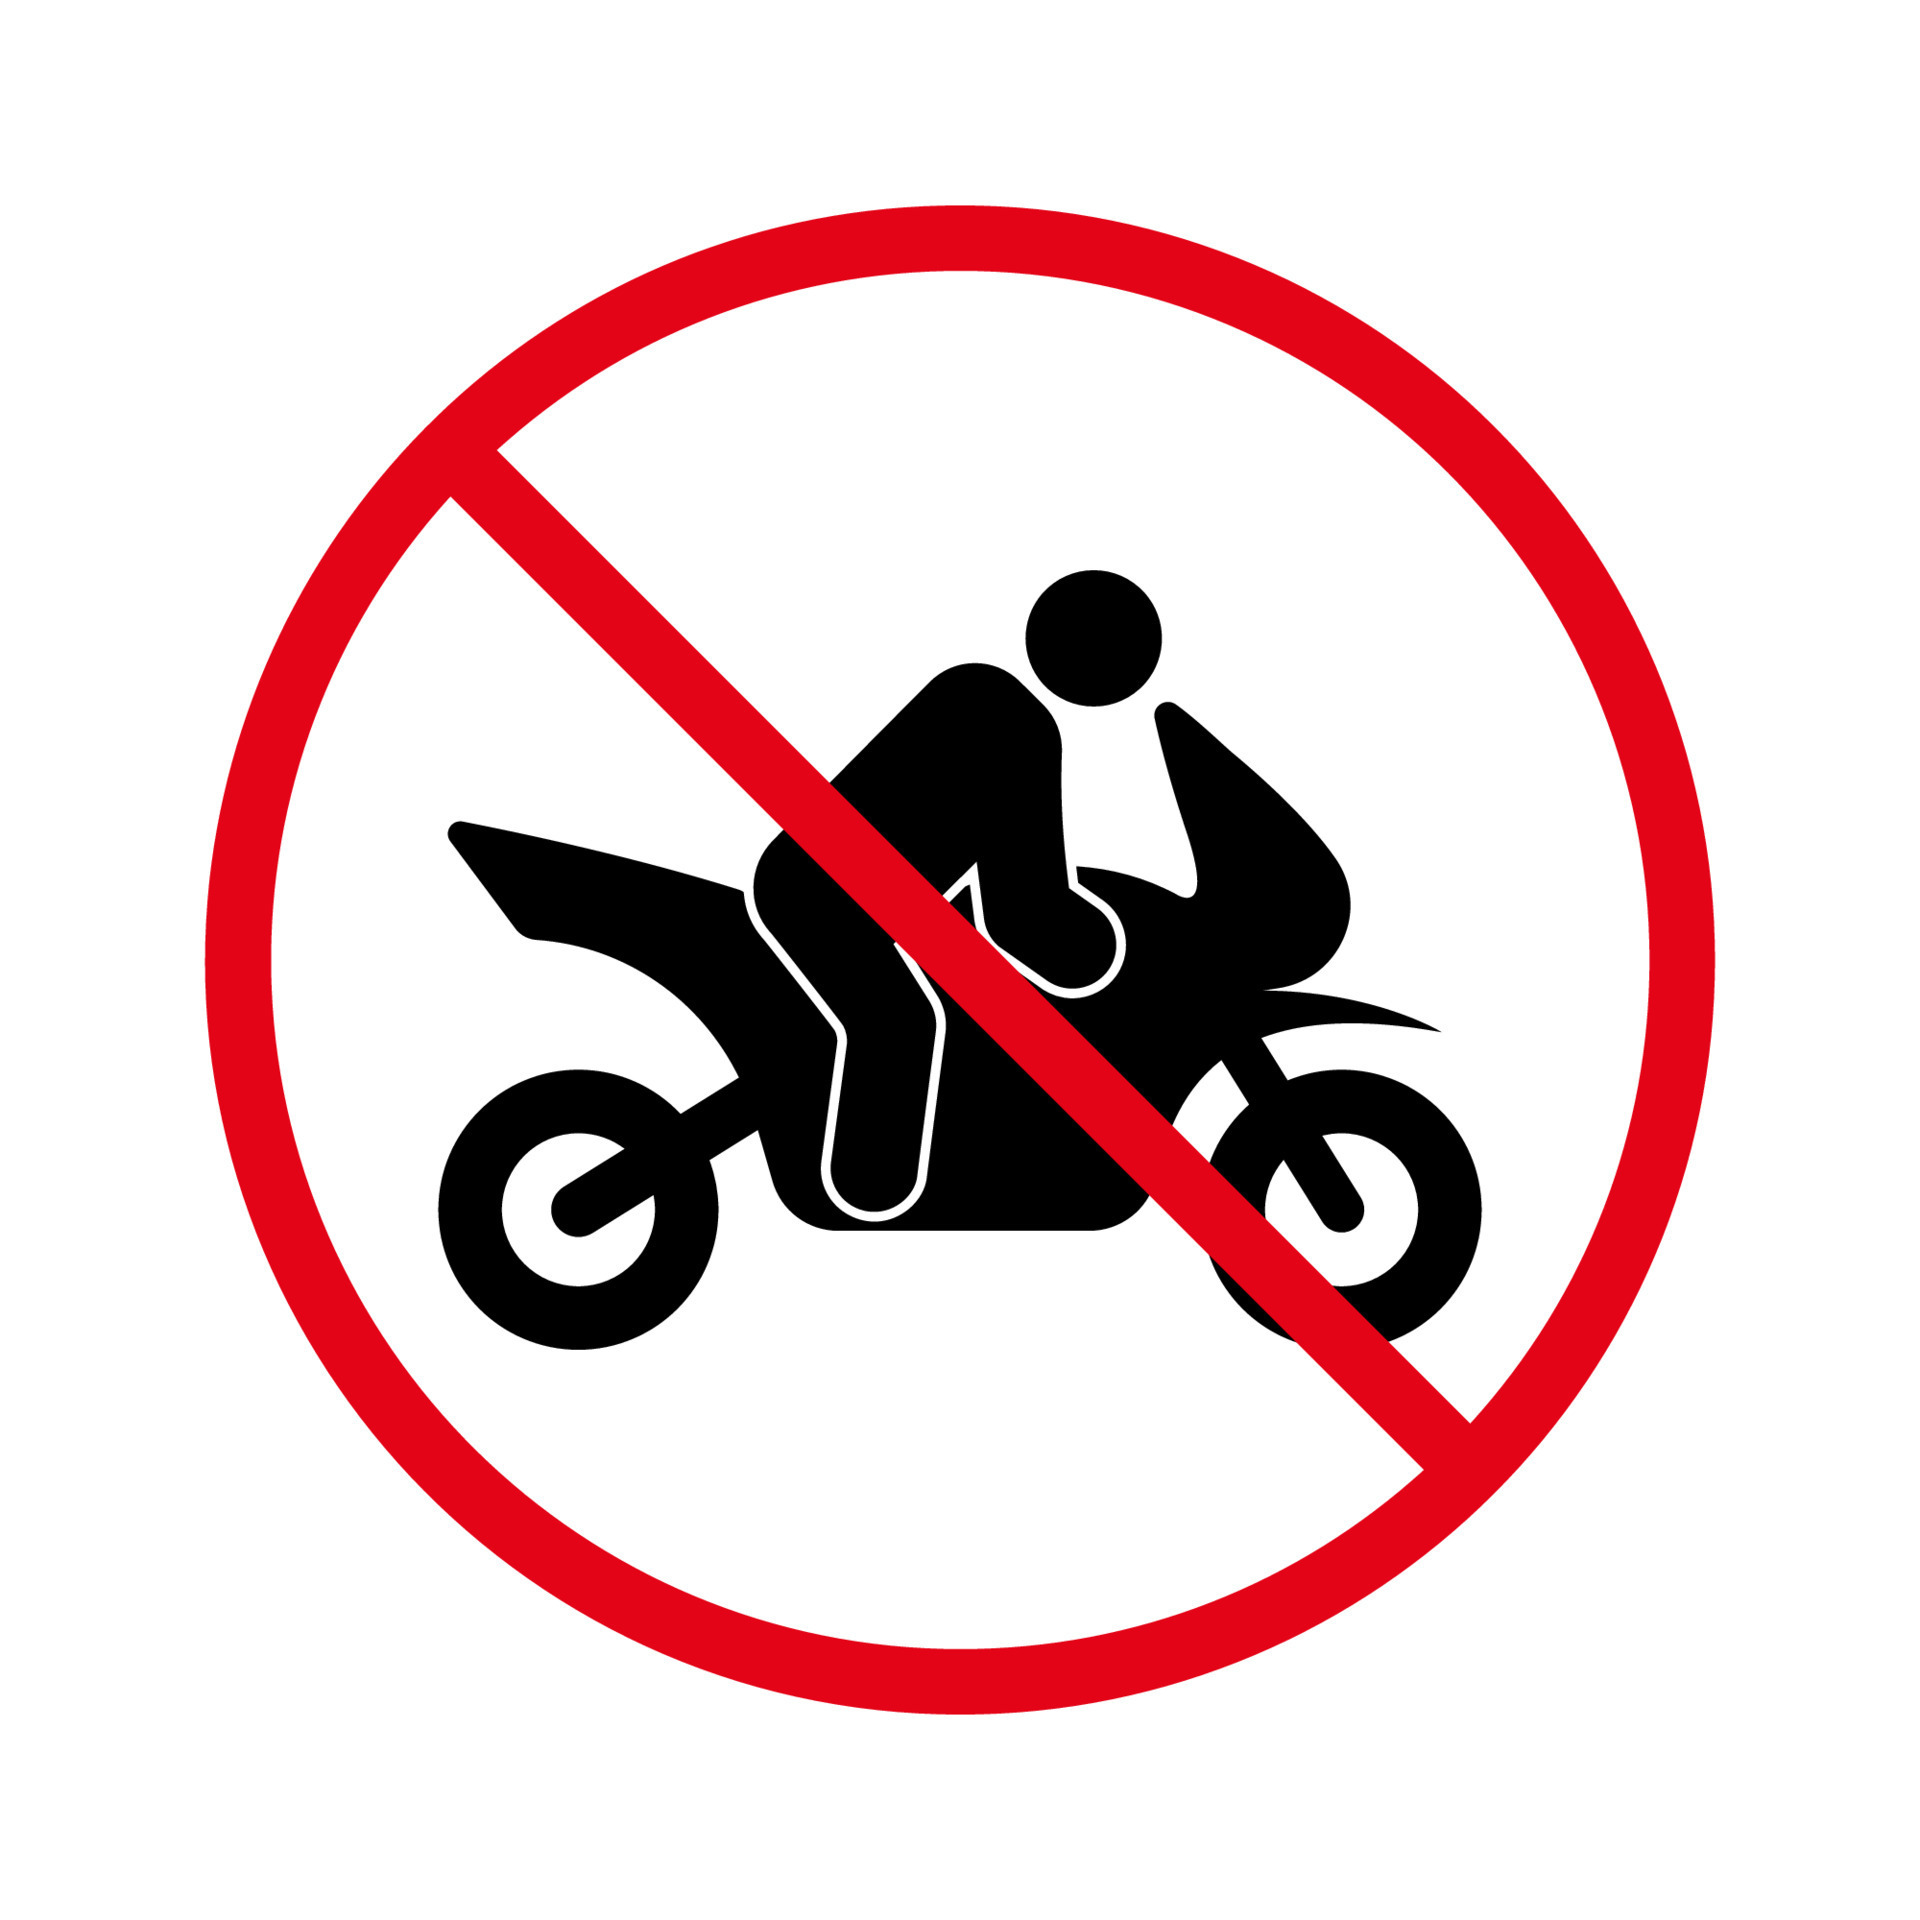 icono de silueta negra de prohibición de transporte de motocicletas.  pictograma de motociclista prohibido. símbolo de círculo de parada roja de  moto. no se permite conducir moto. prohibir la señal de tráfico